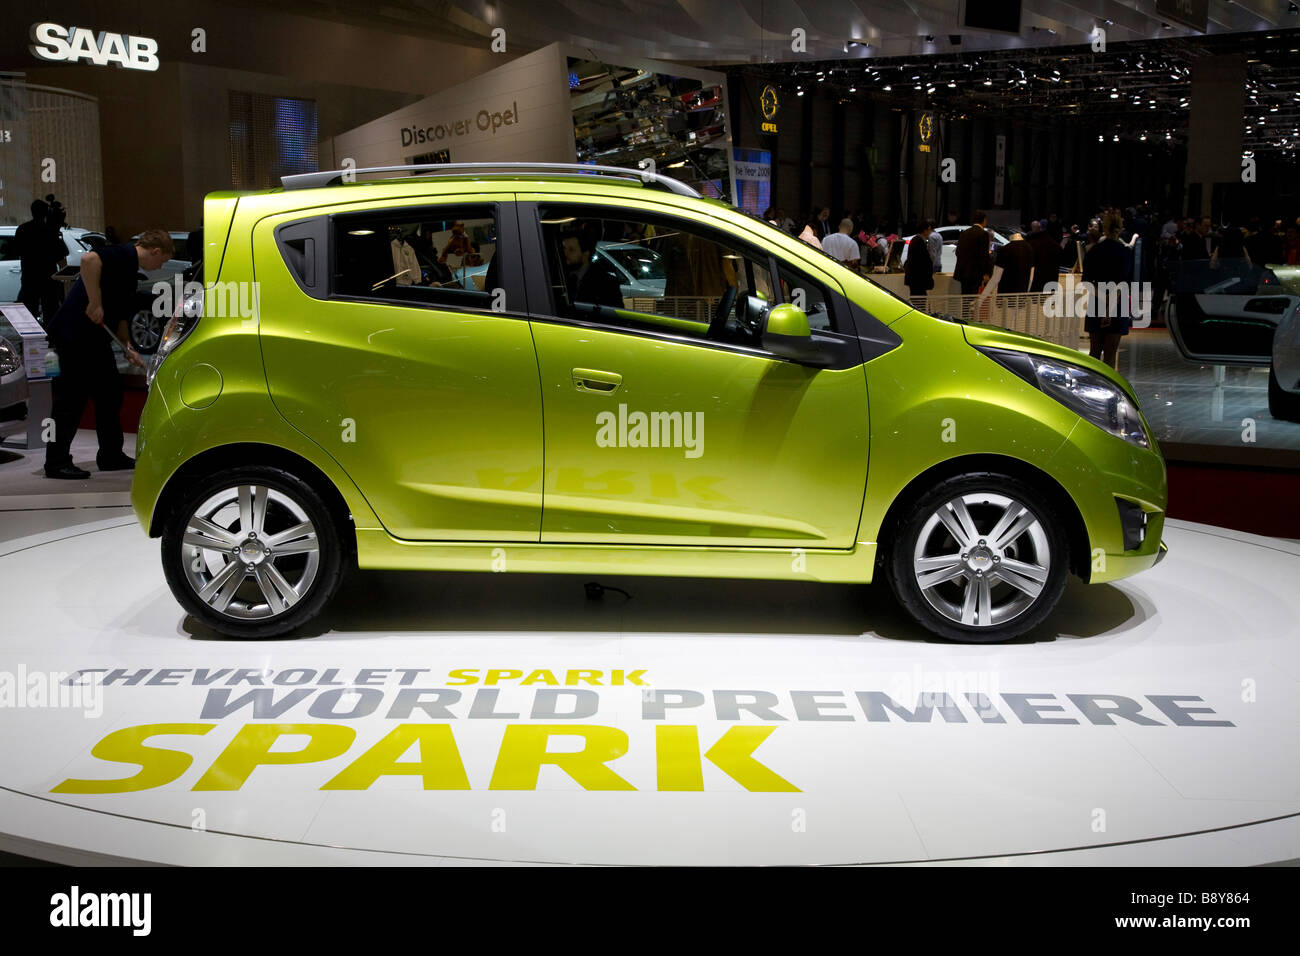 Chevrolet Spark shown at a European motor show. Stock Photo